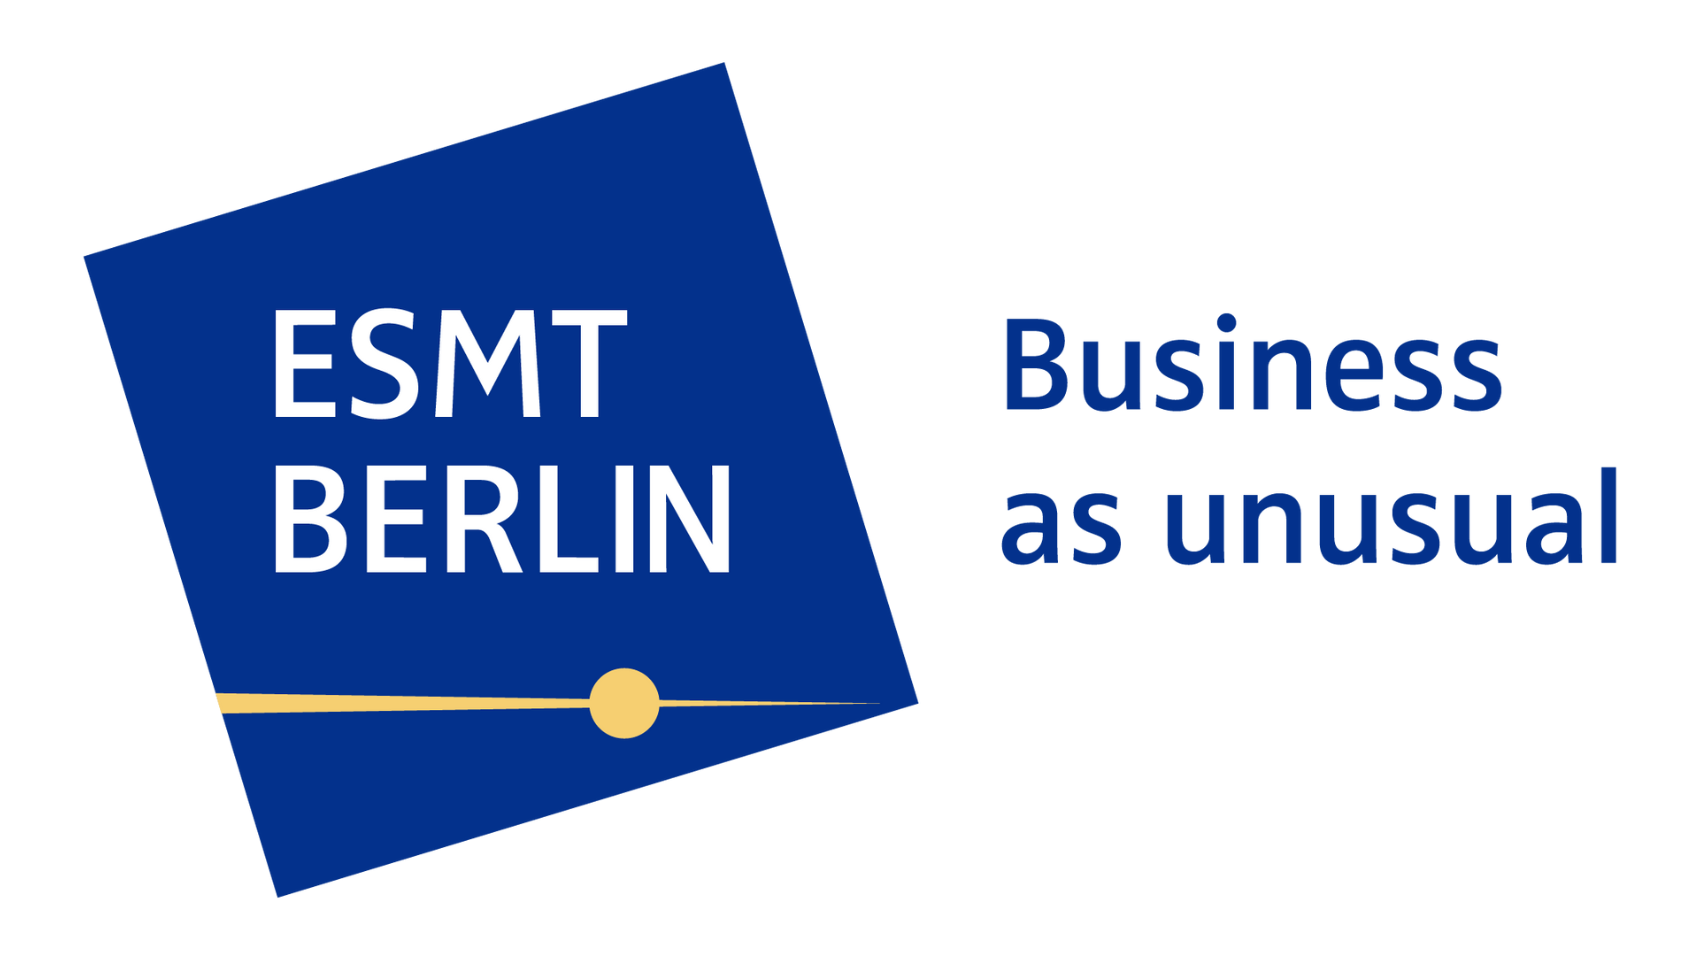 ESMT brand design saying business as unusual